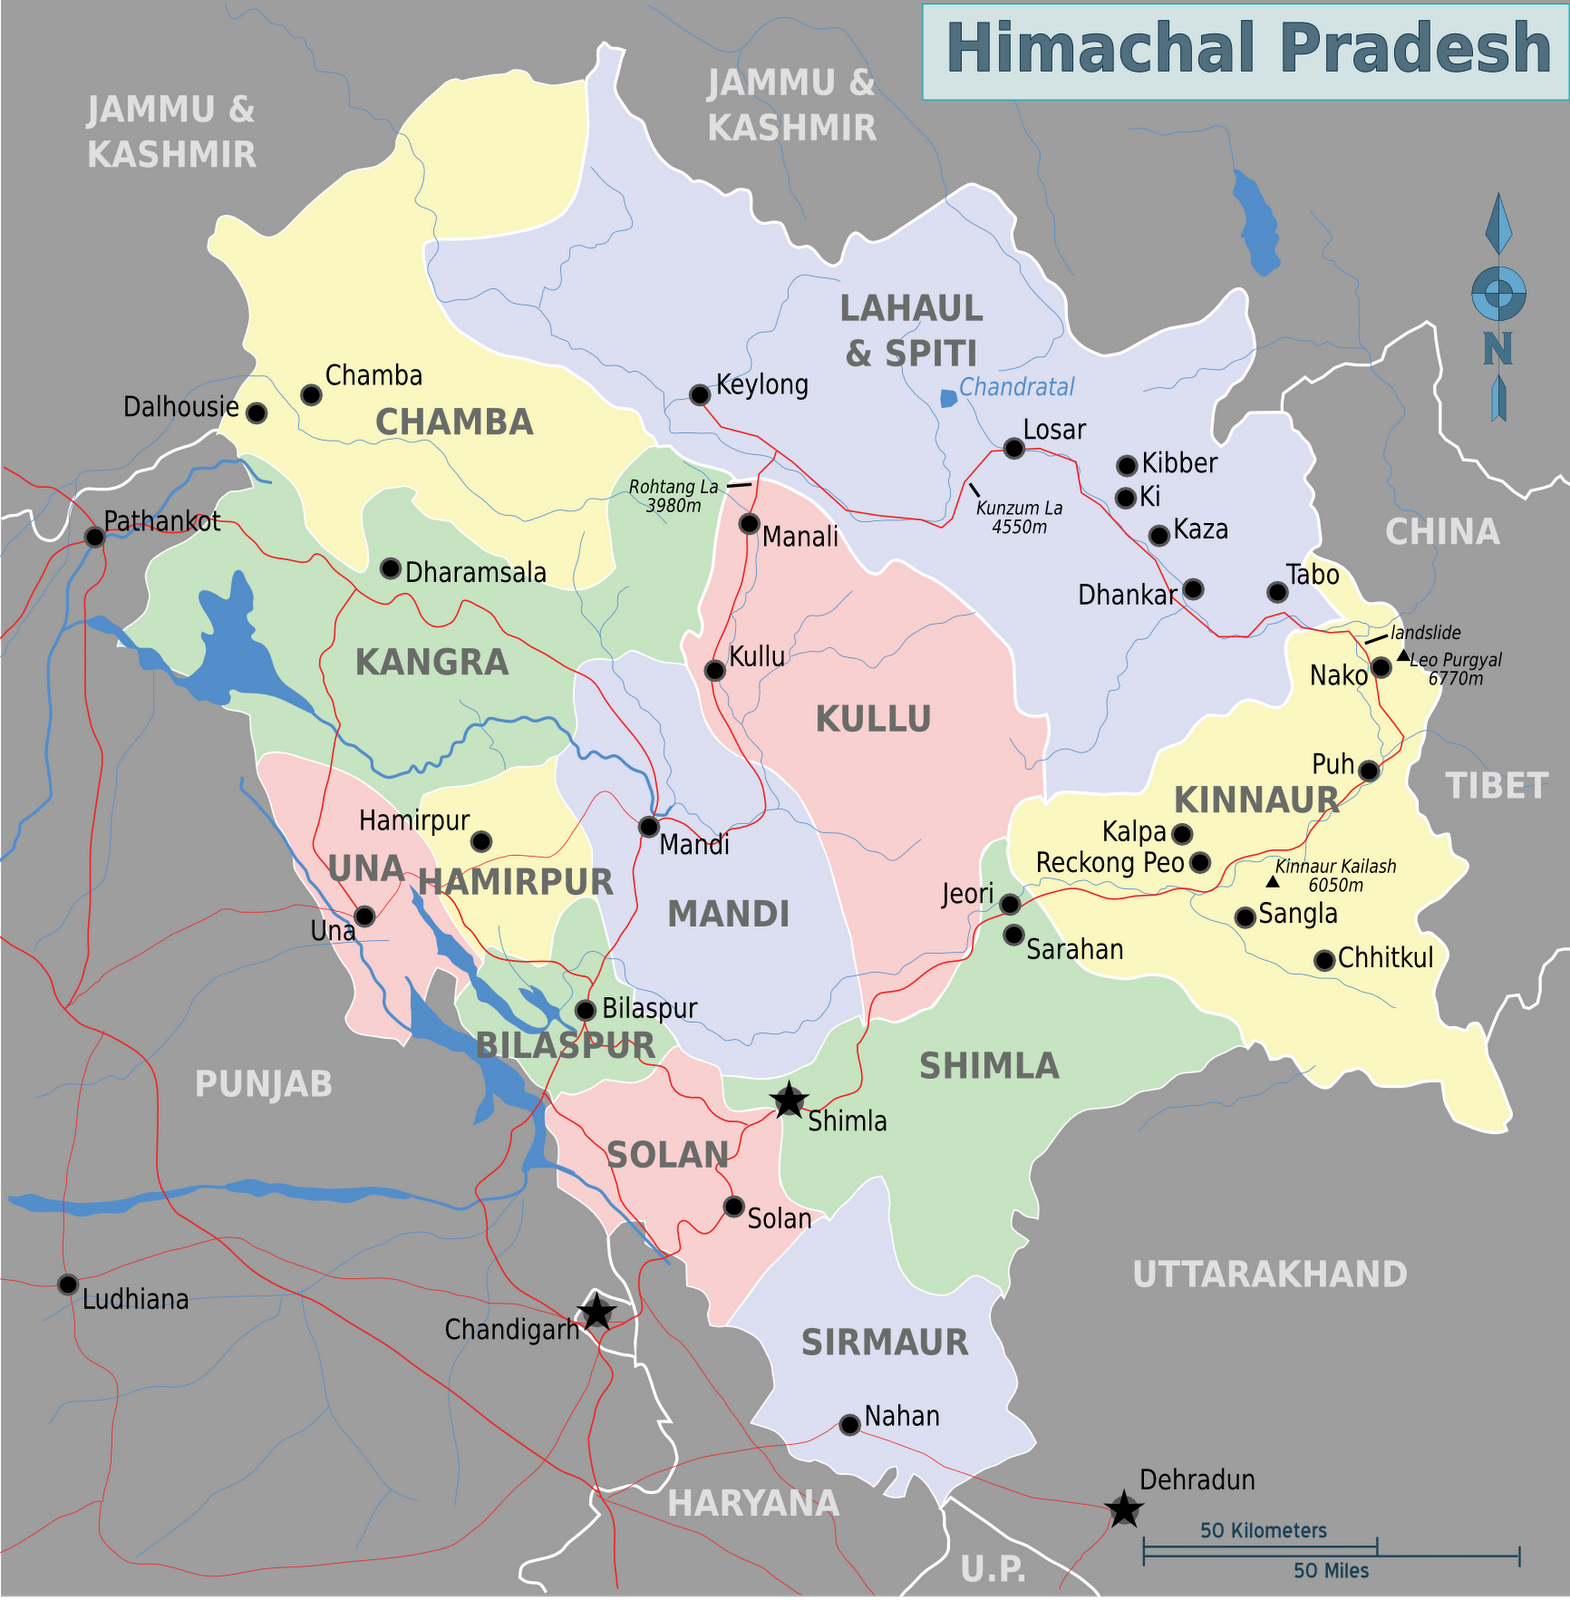 Himachal Pradesh Map